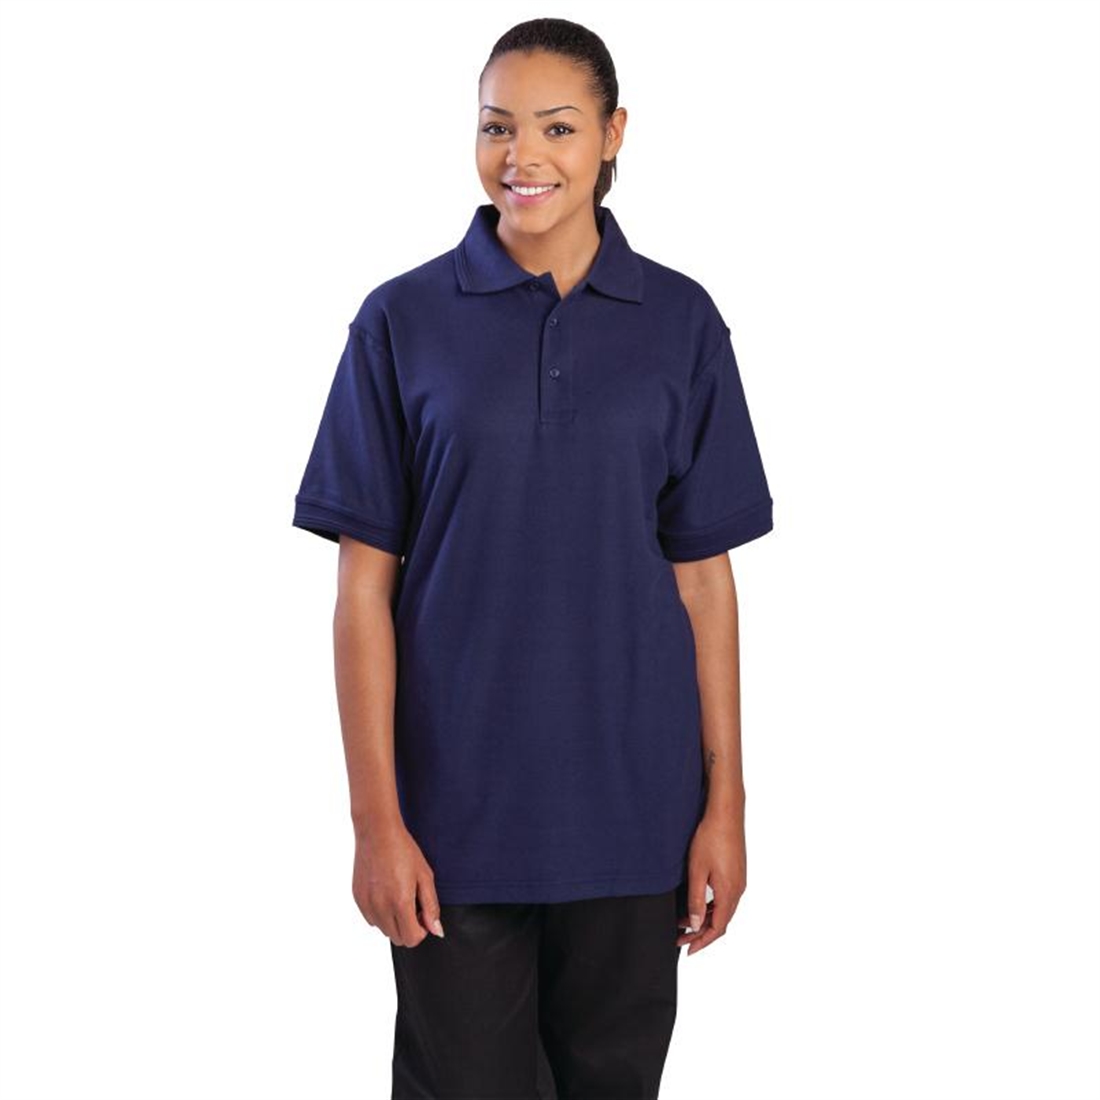 Unisex Polo Shirt Navy Blue XL